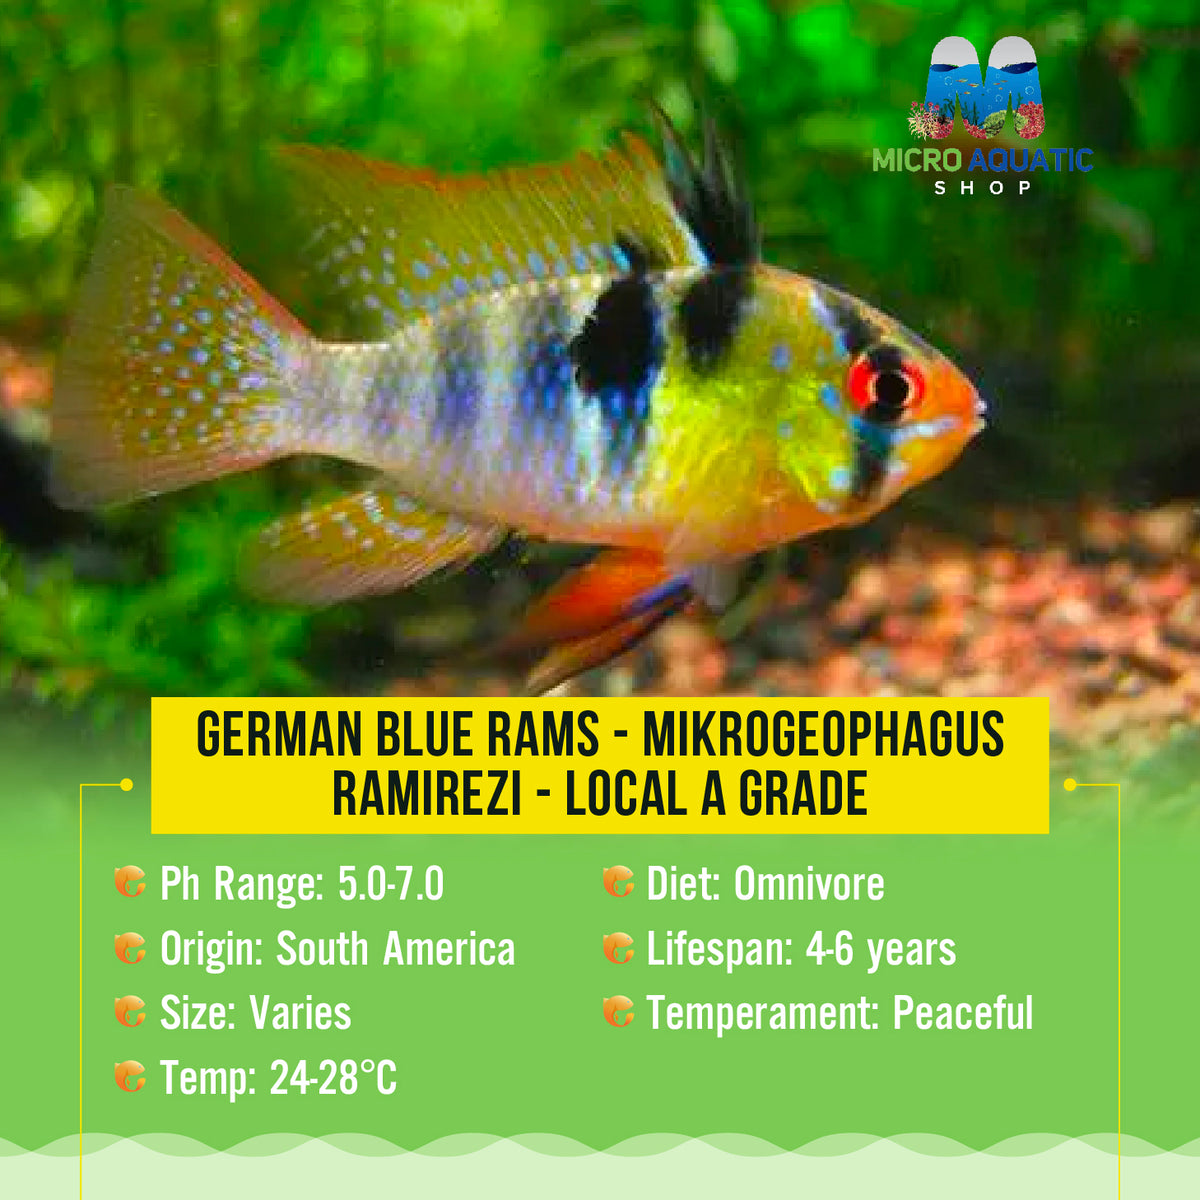 German Blue Rams - Mikrogeophagus ramirezi - Local A grade